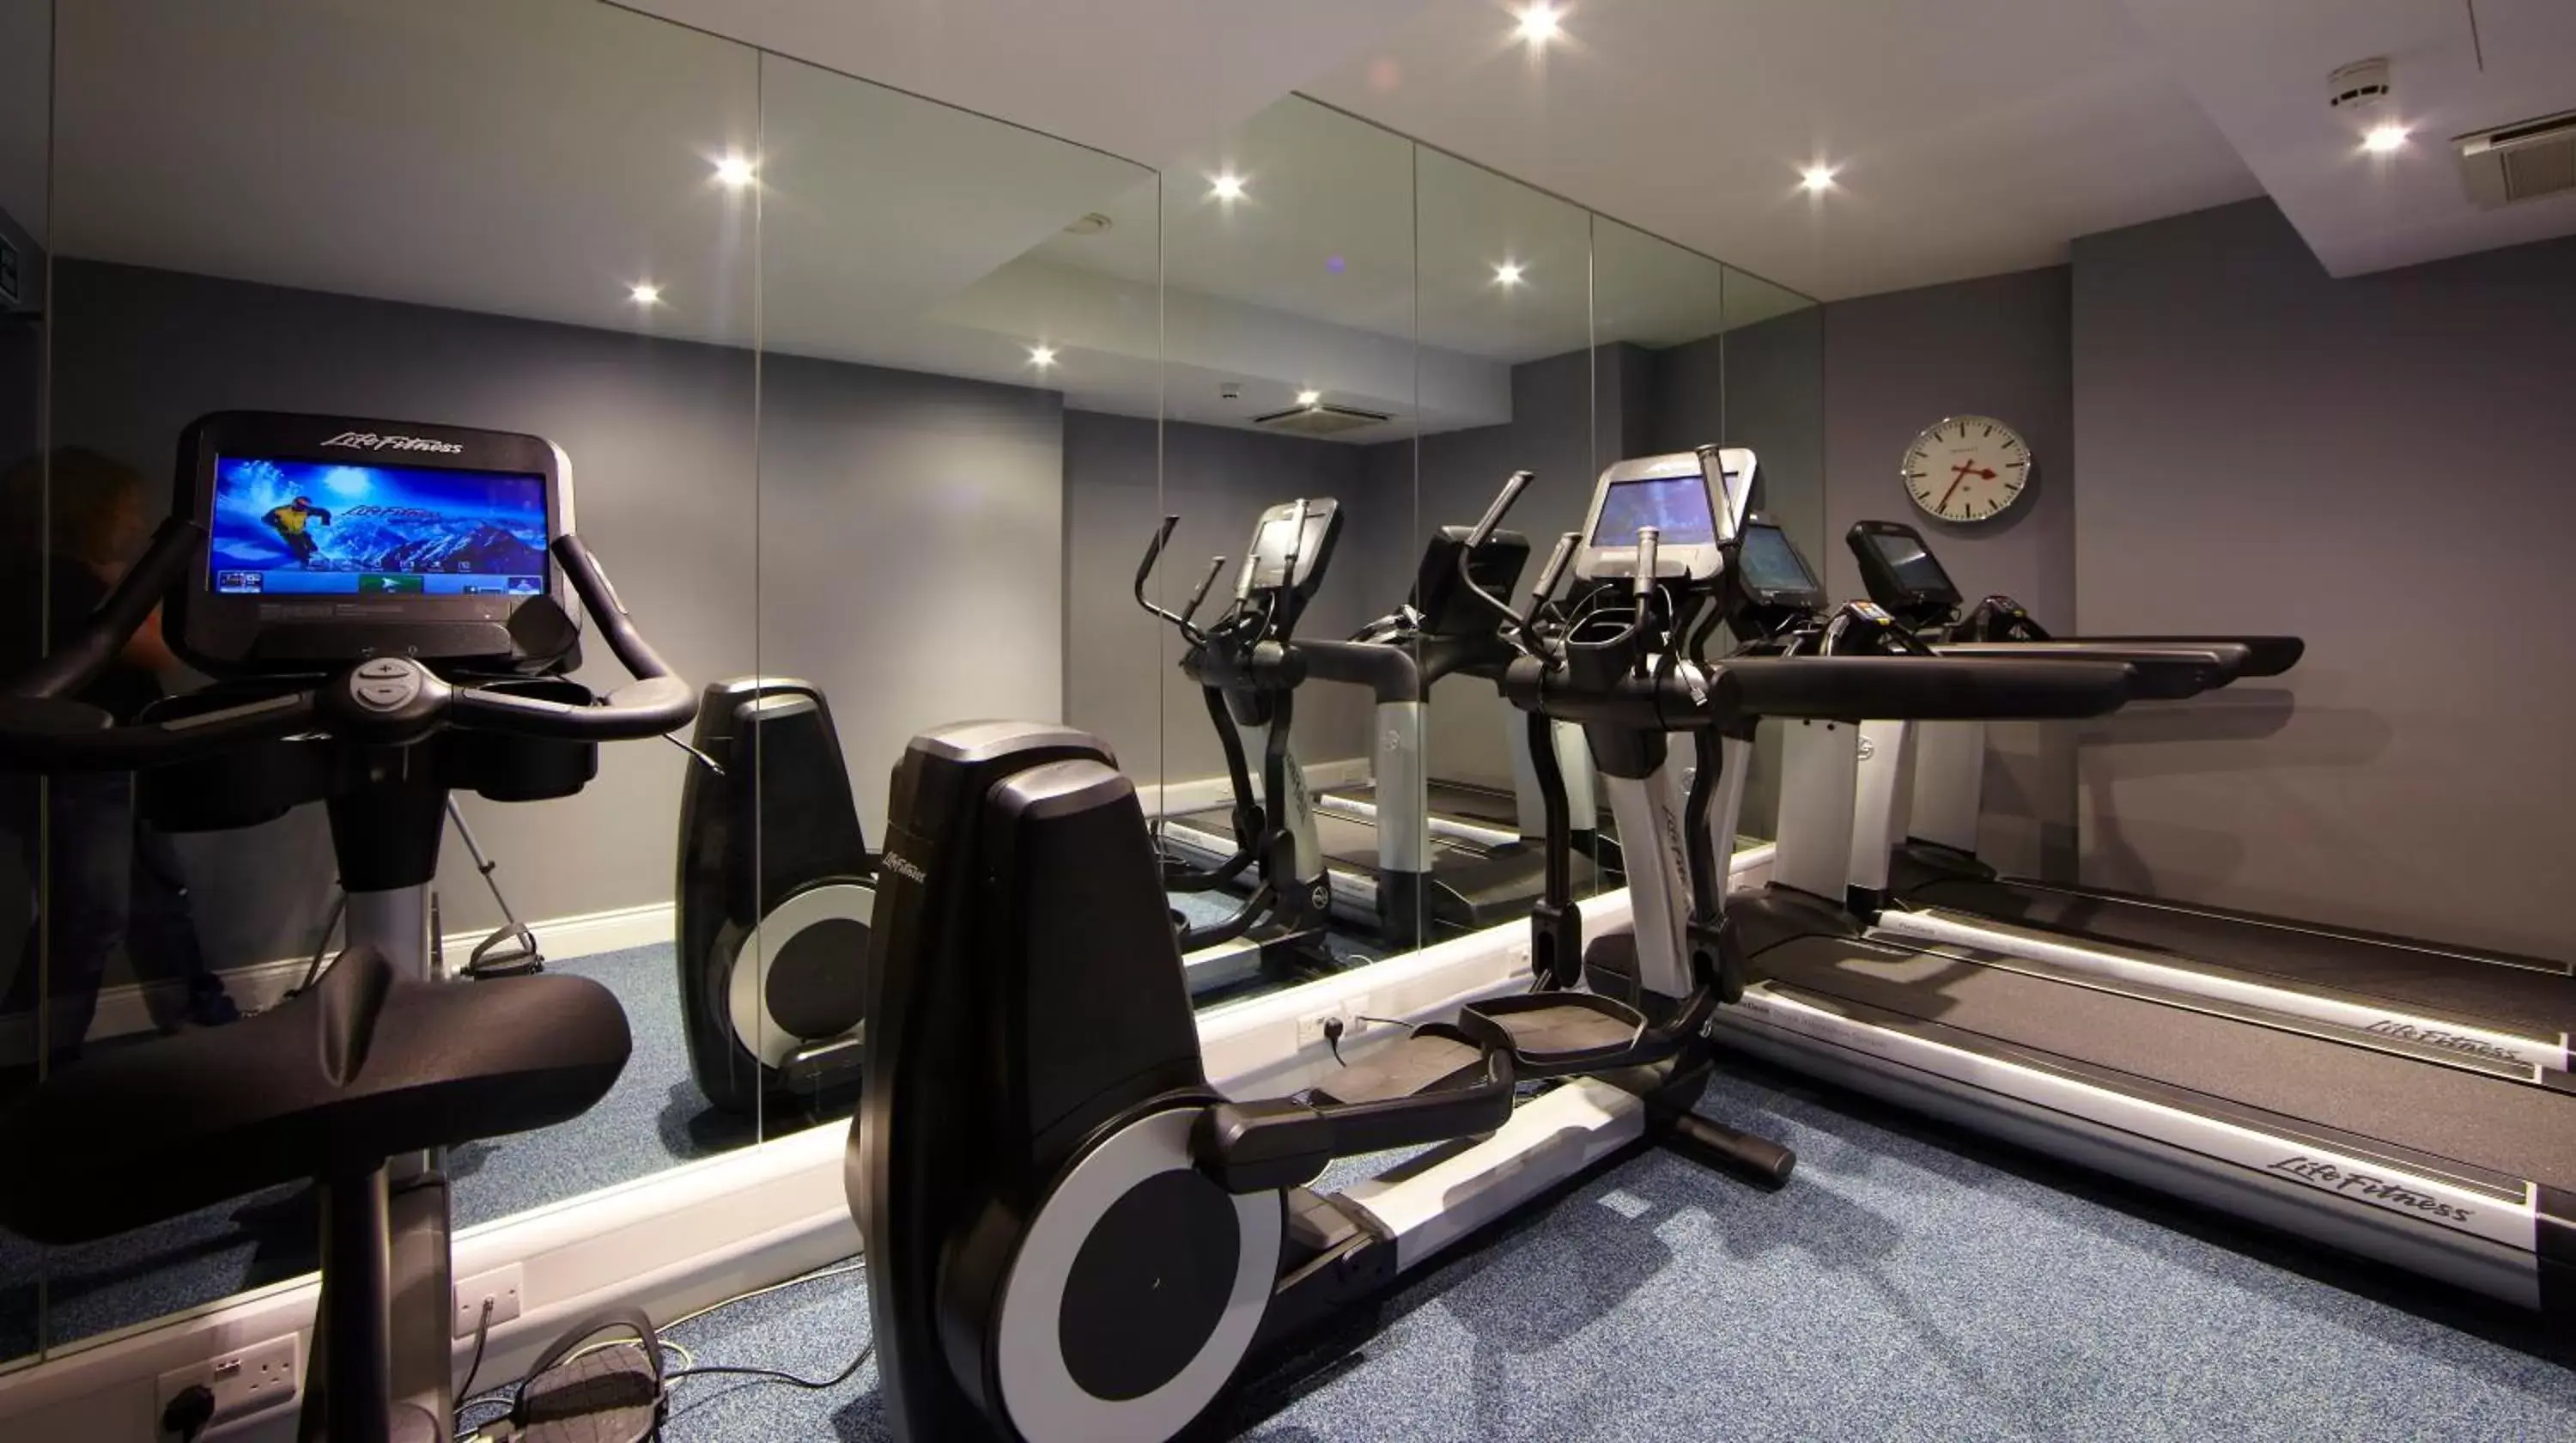 Fitness centre/facilities, Fitness Center/Facilities in Malmaison London